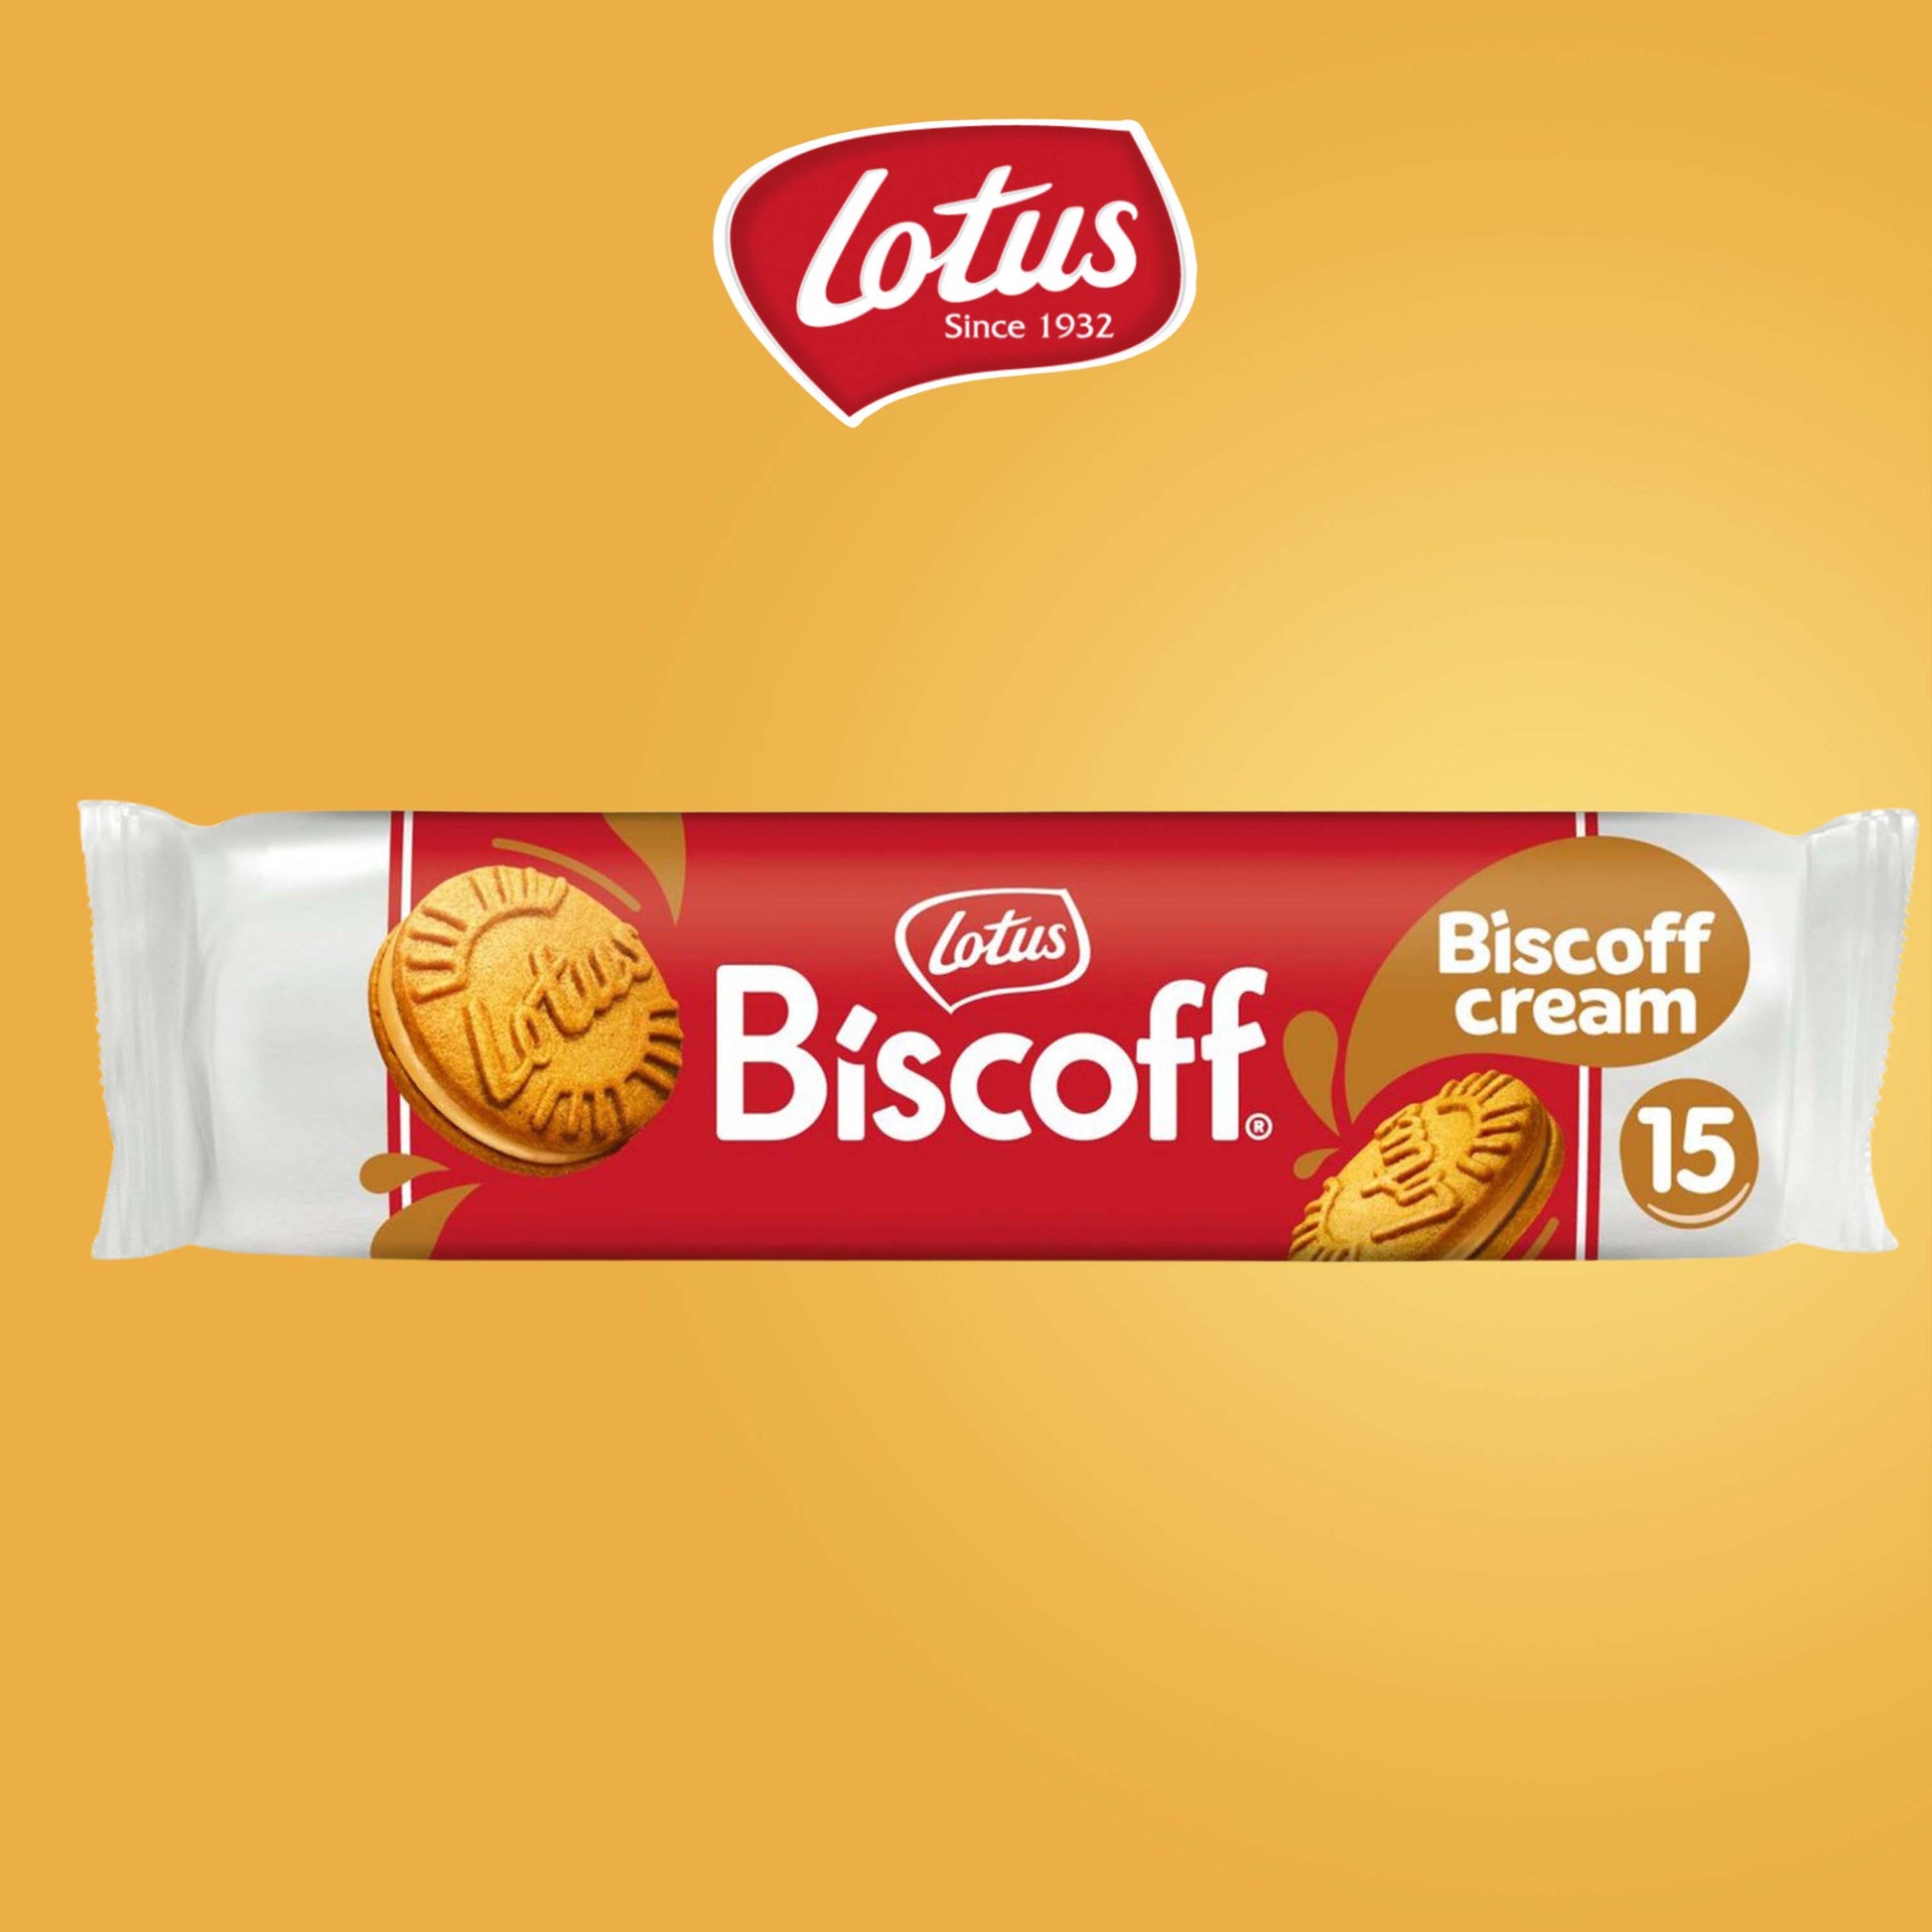 Lotus Biscoff Sandwich Biscoff Cream - 150g - BRITISH CLASSIC SNACKS